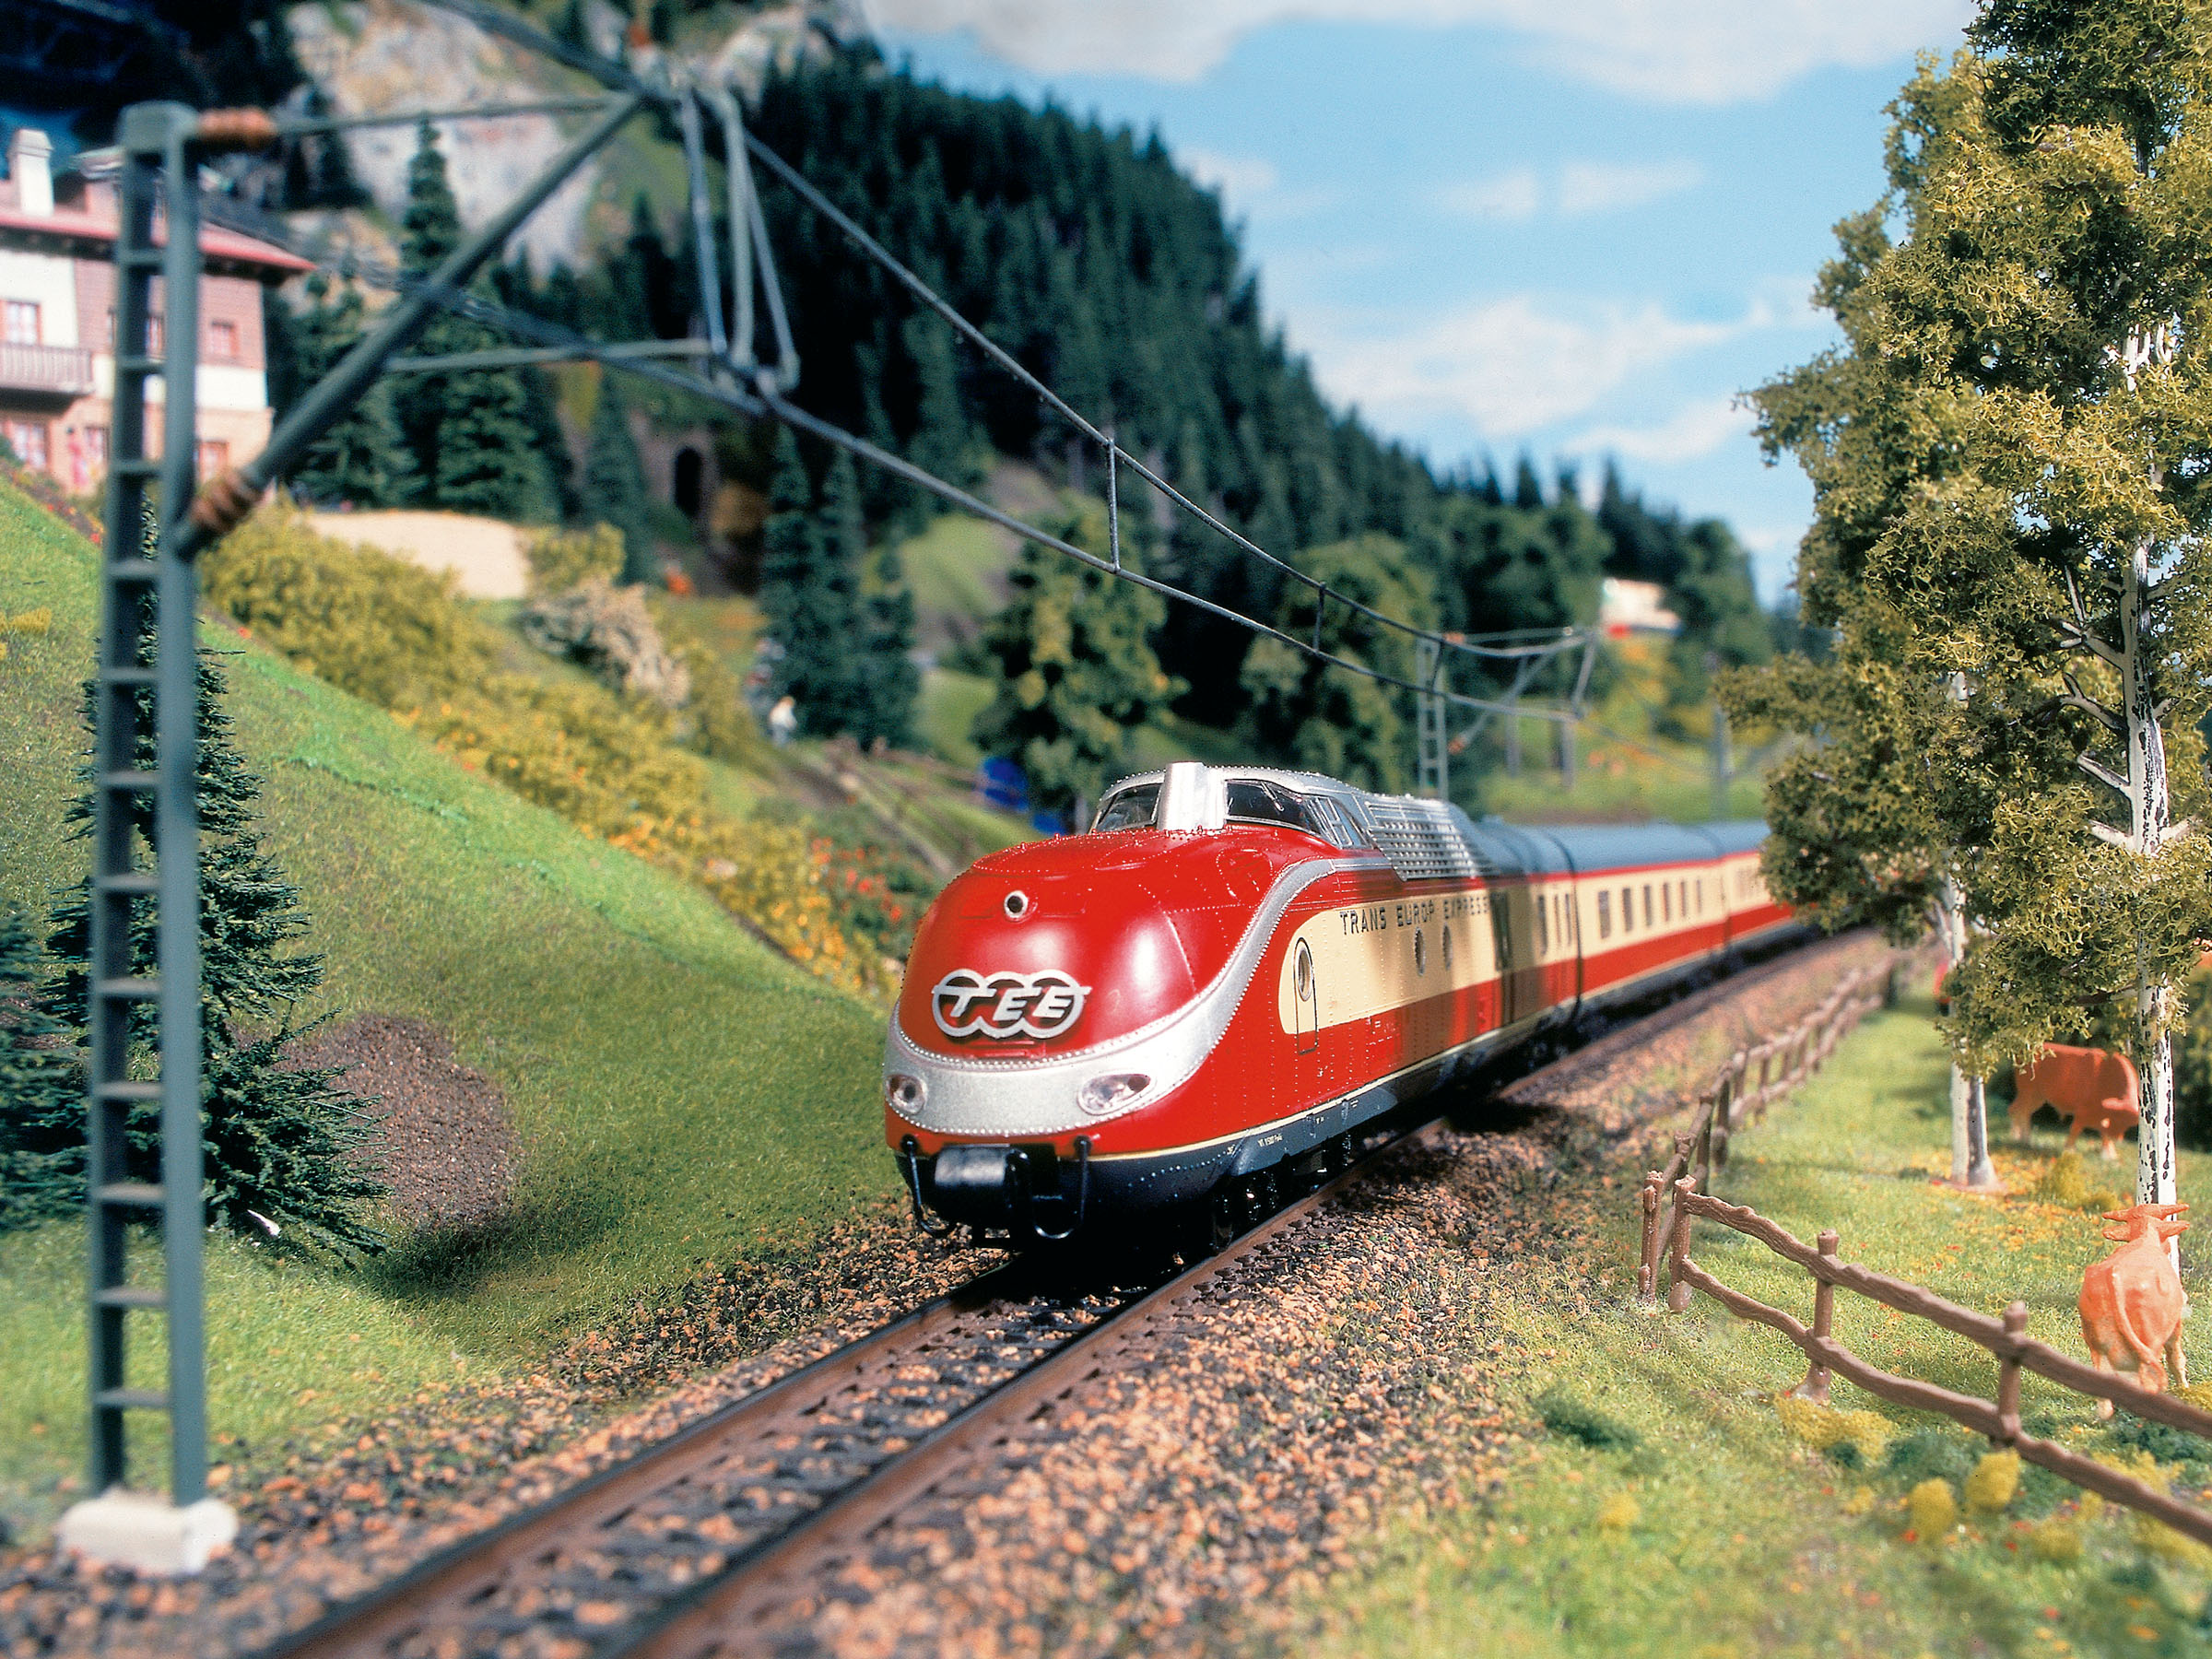 ferromodelismo, modelismo ferroviario, trenes eléctricos - Fascinating video of the world’s largest HO scale model railway layout - Miniatur Wunderland Germany